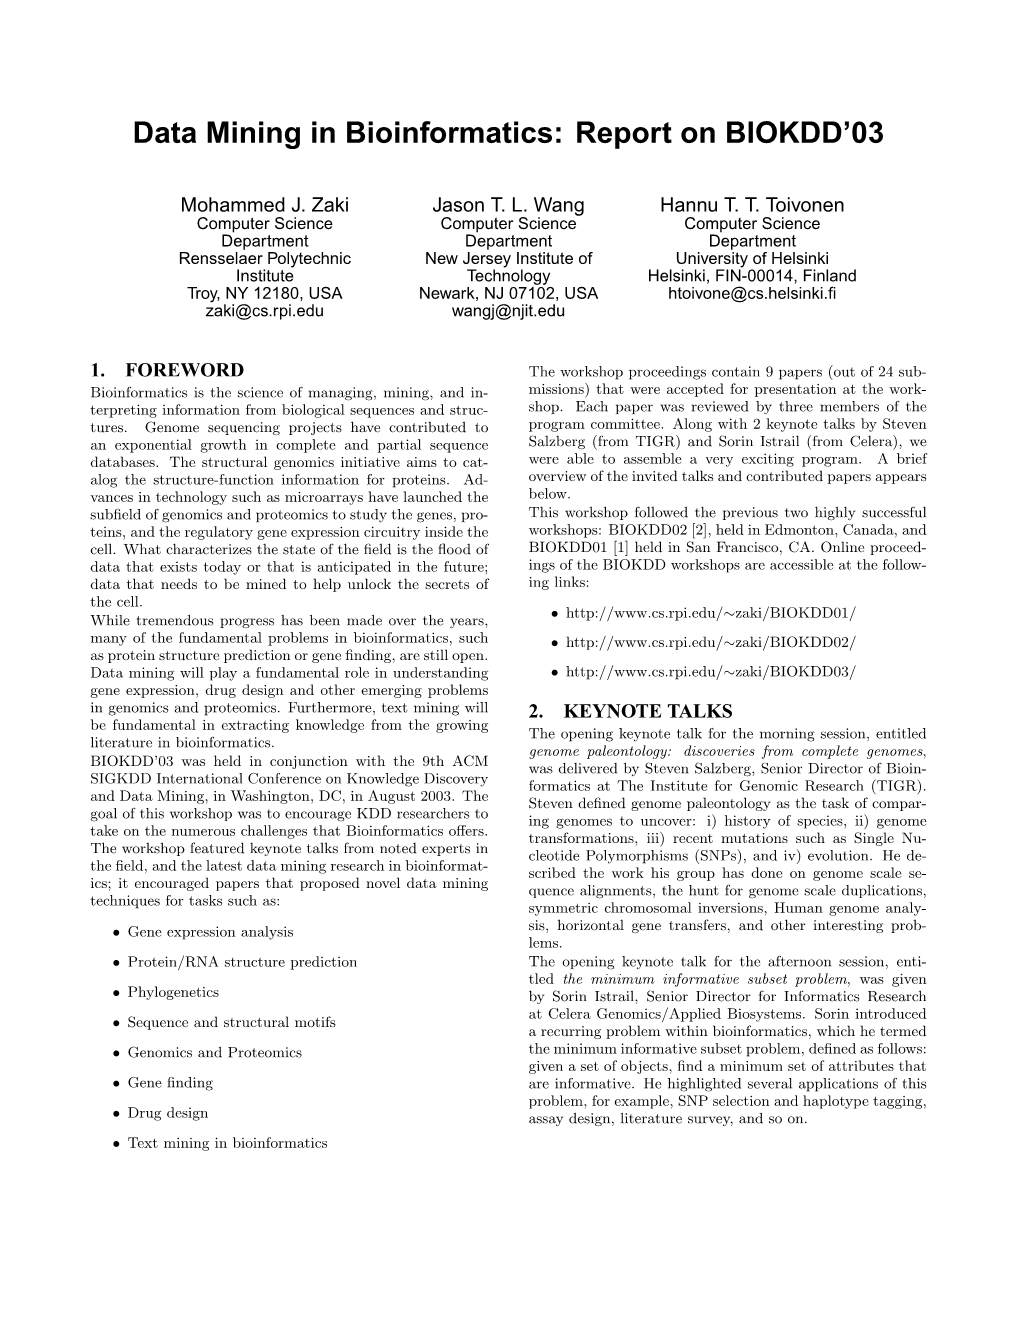 Data Mining in Bioinformatics: Report on BIOKDD'03